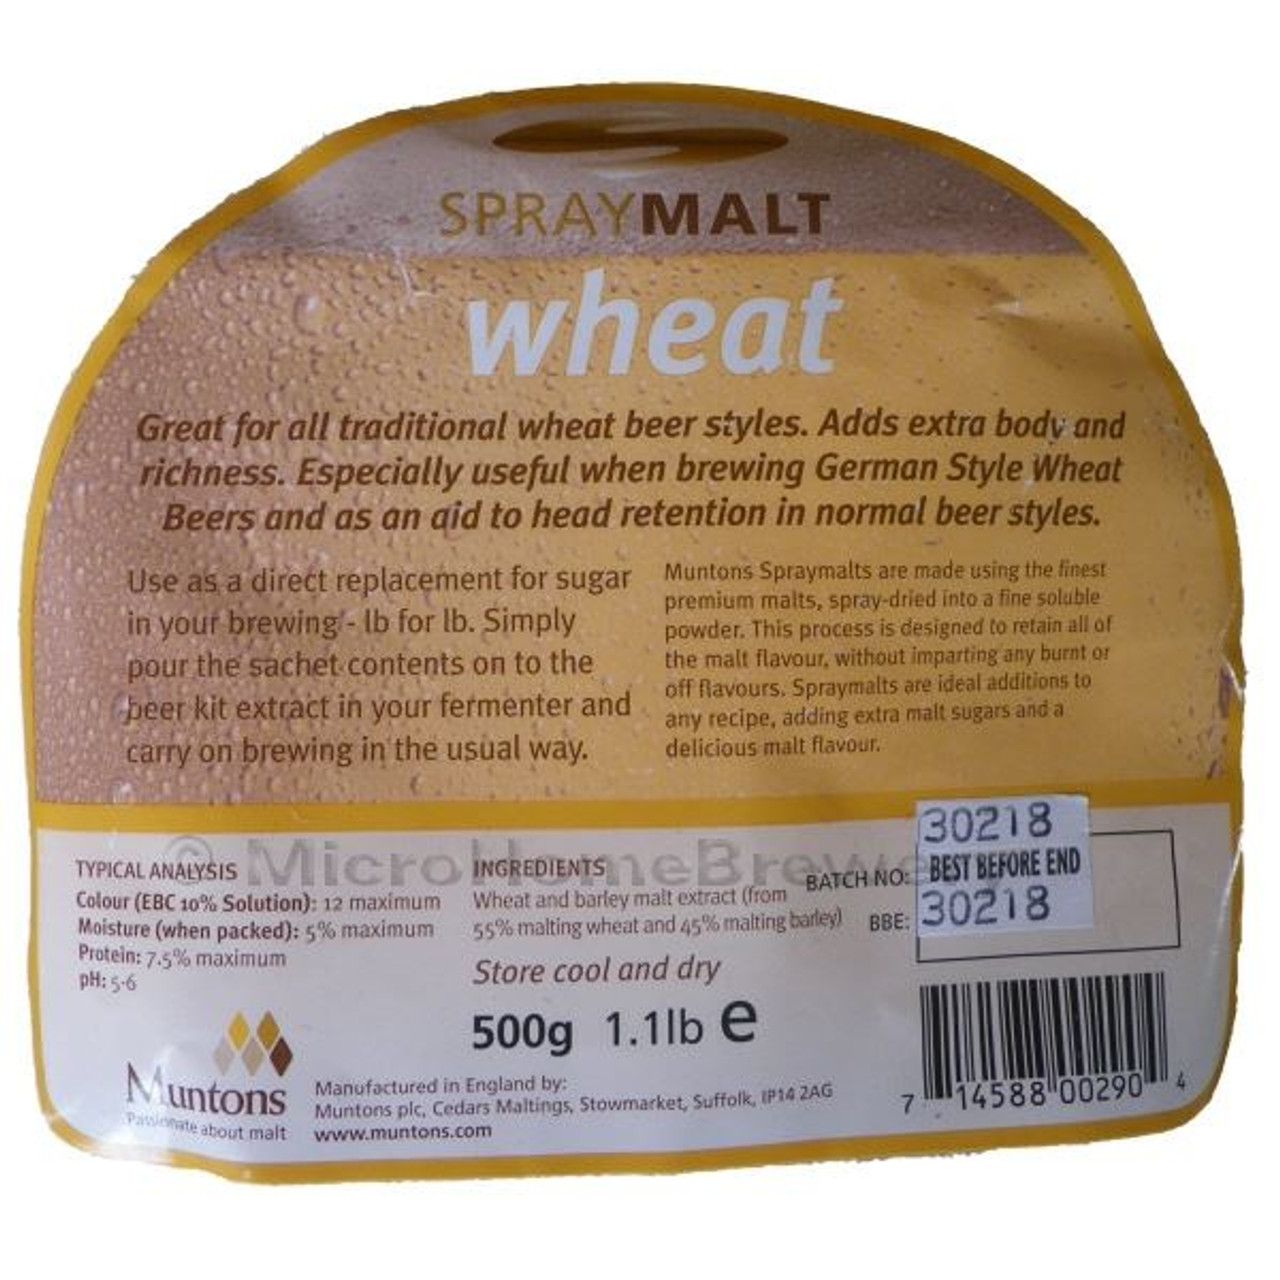 Muntons Spraymalt WHEAT 500g 100% Malt Extract Home Brew Beer Improver BBE 06-2023